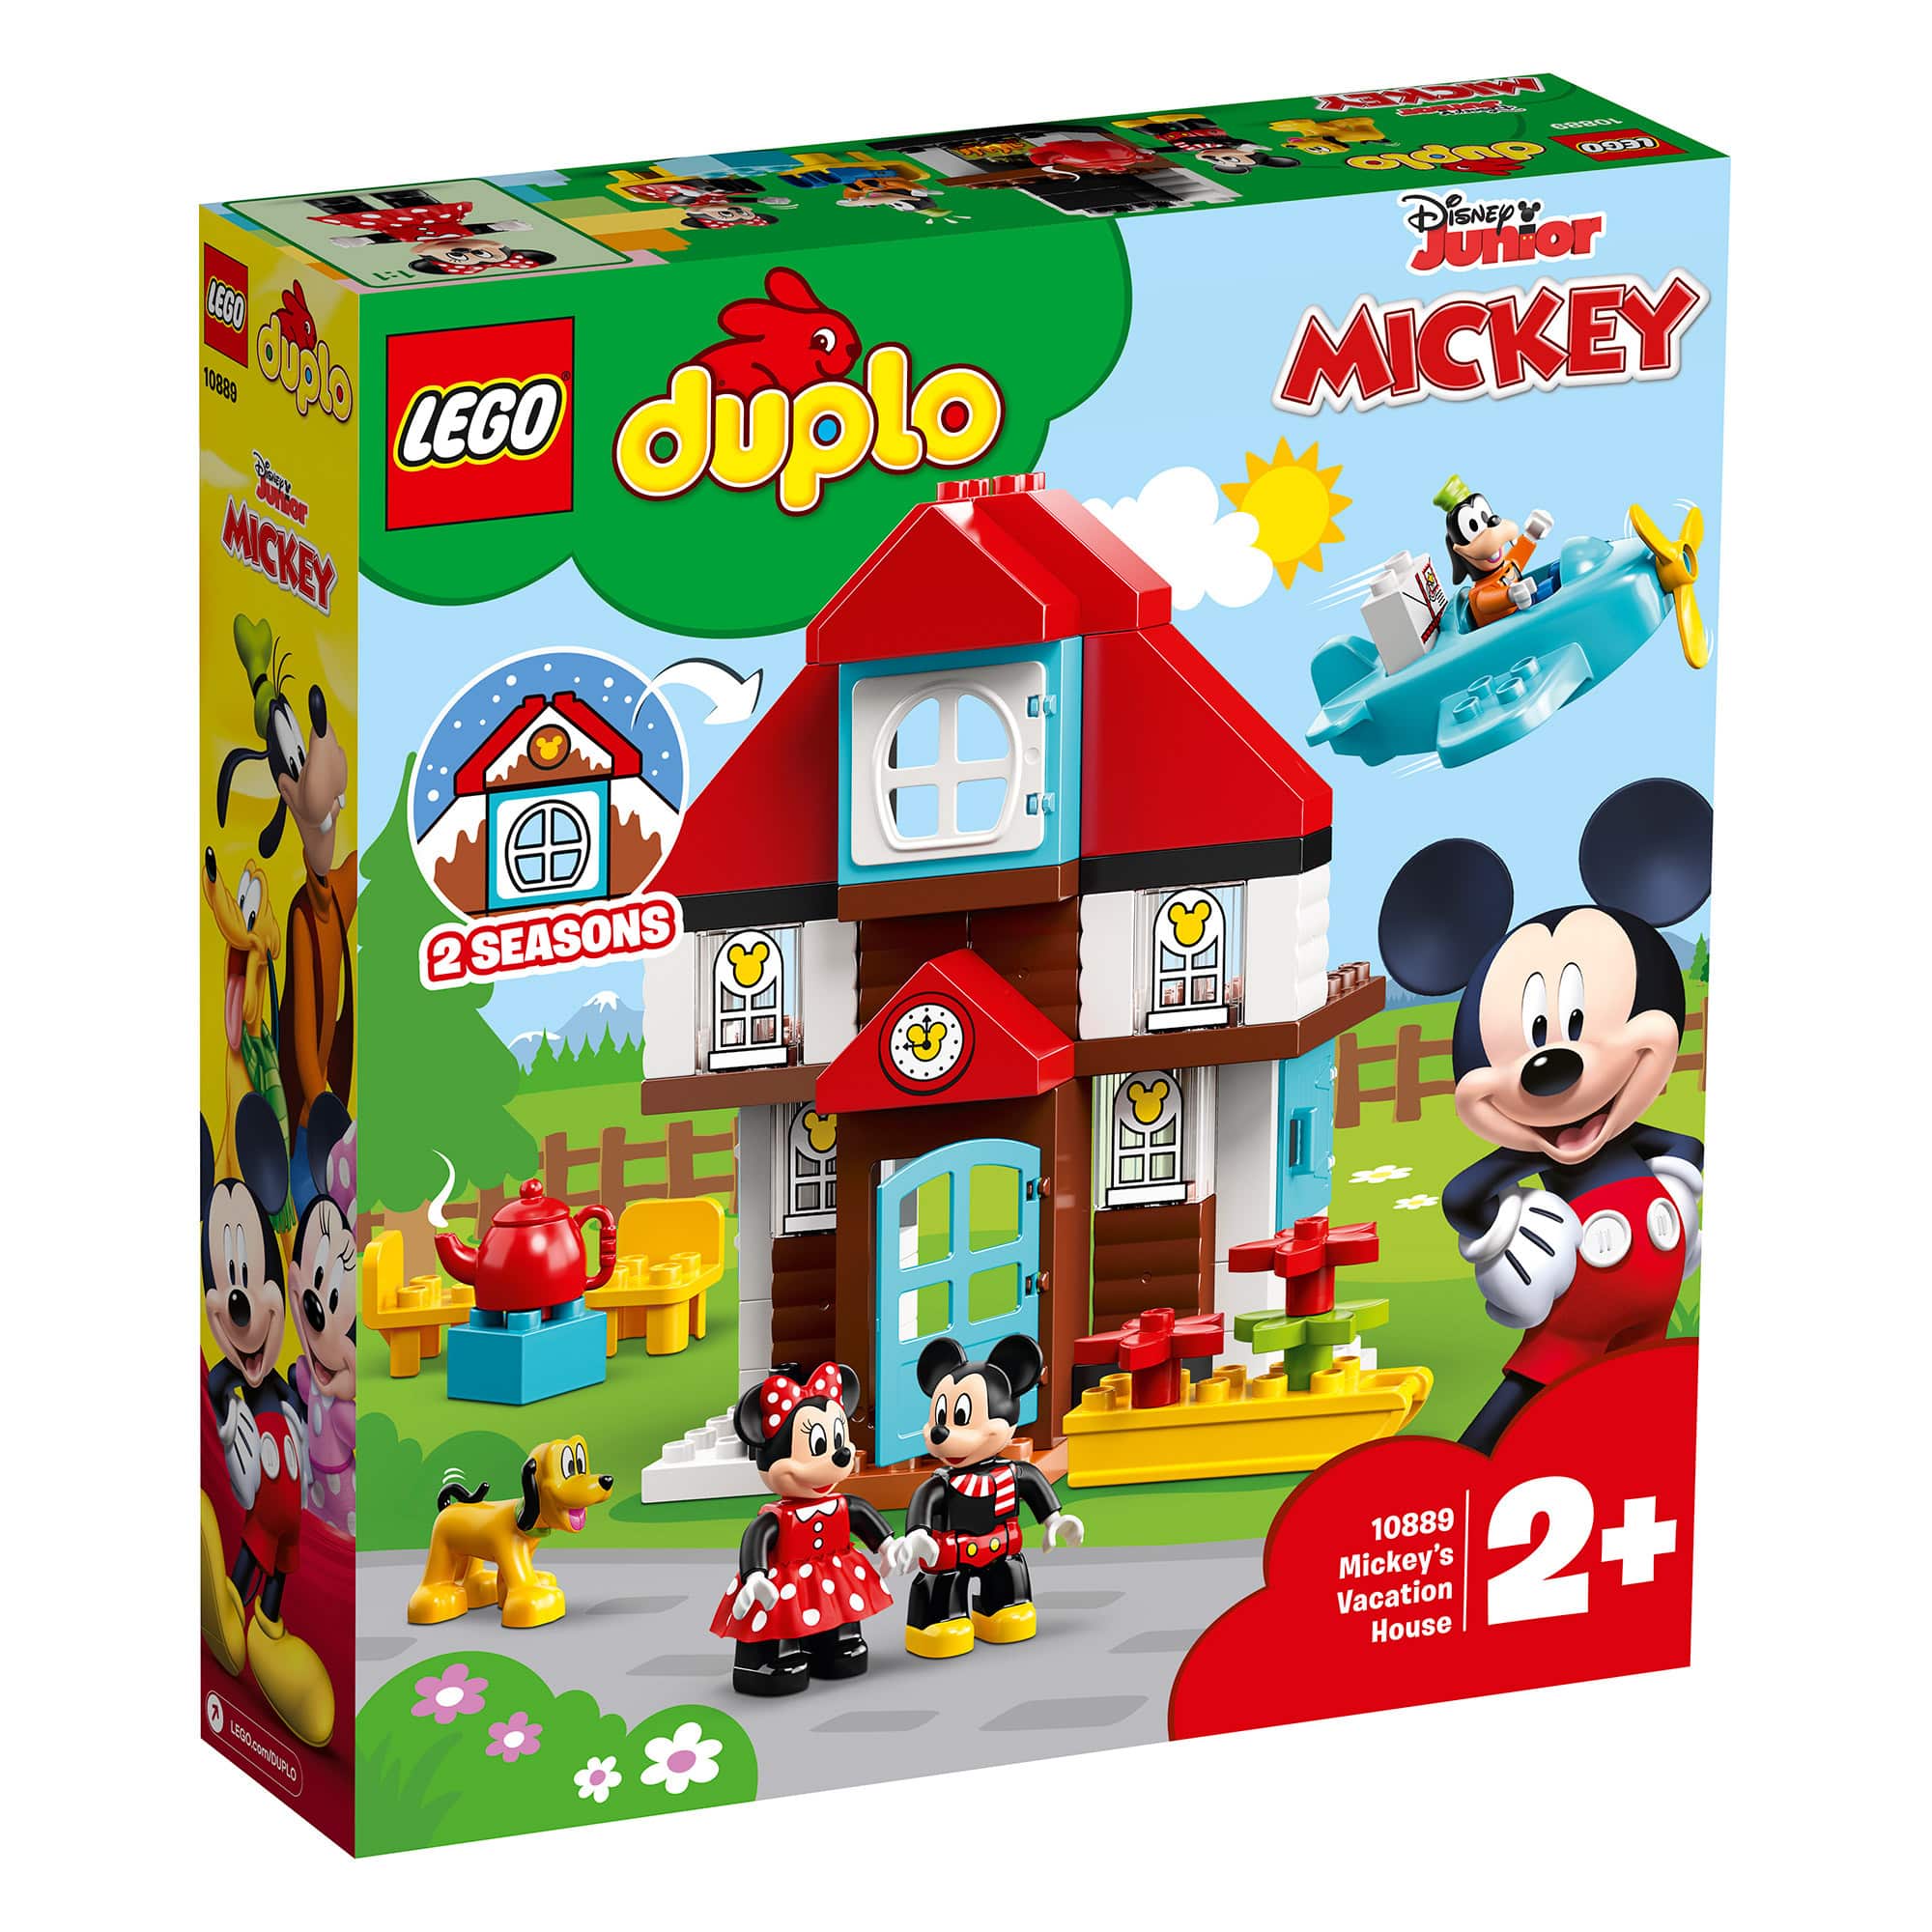 LEGO Duplo 10889 - Mickey's Vacation House